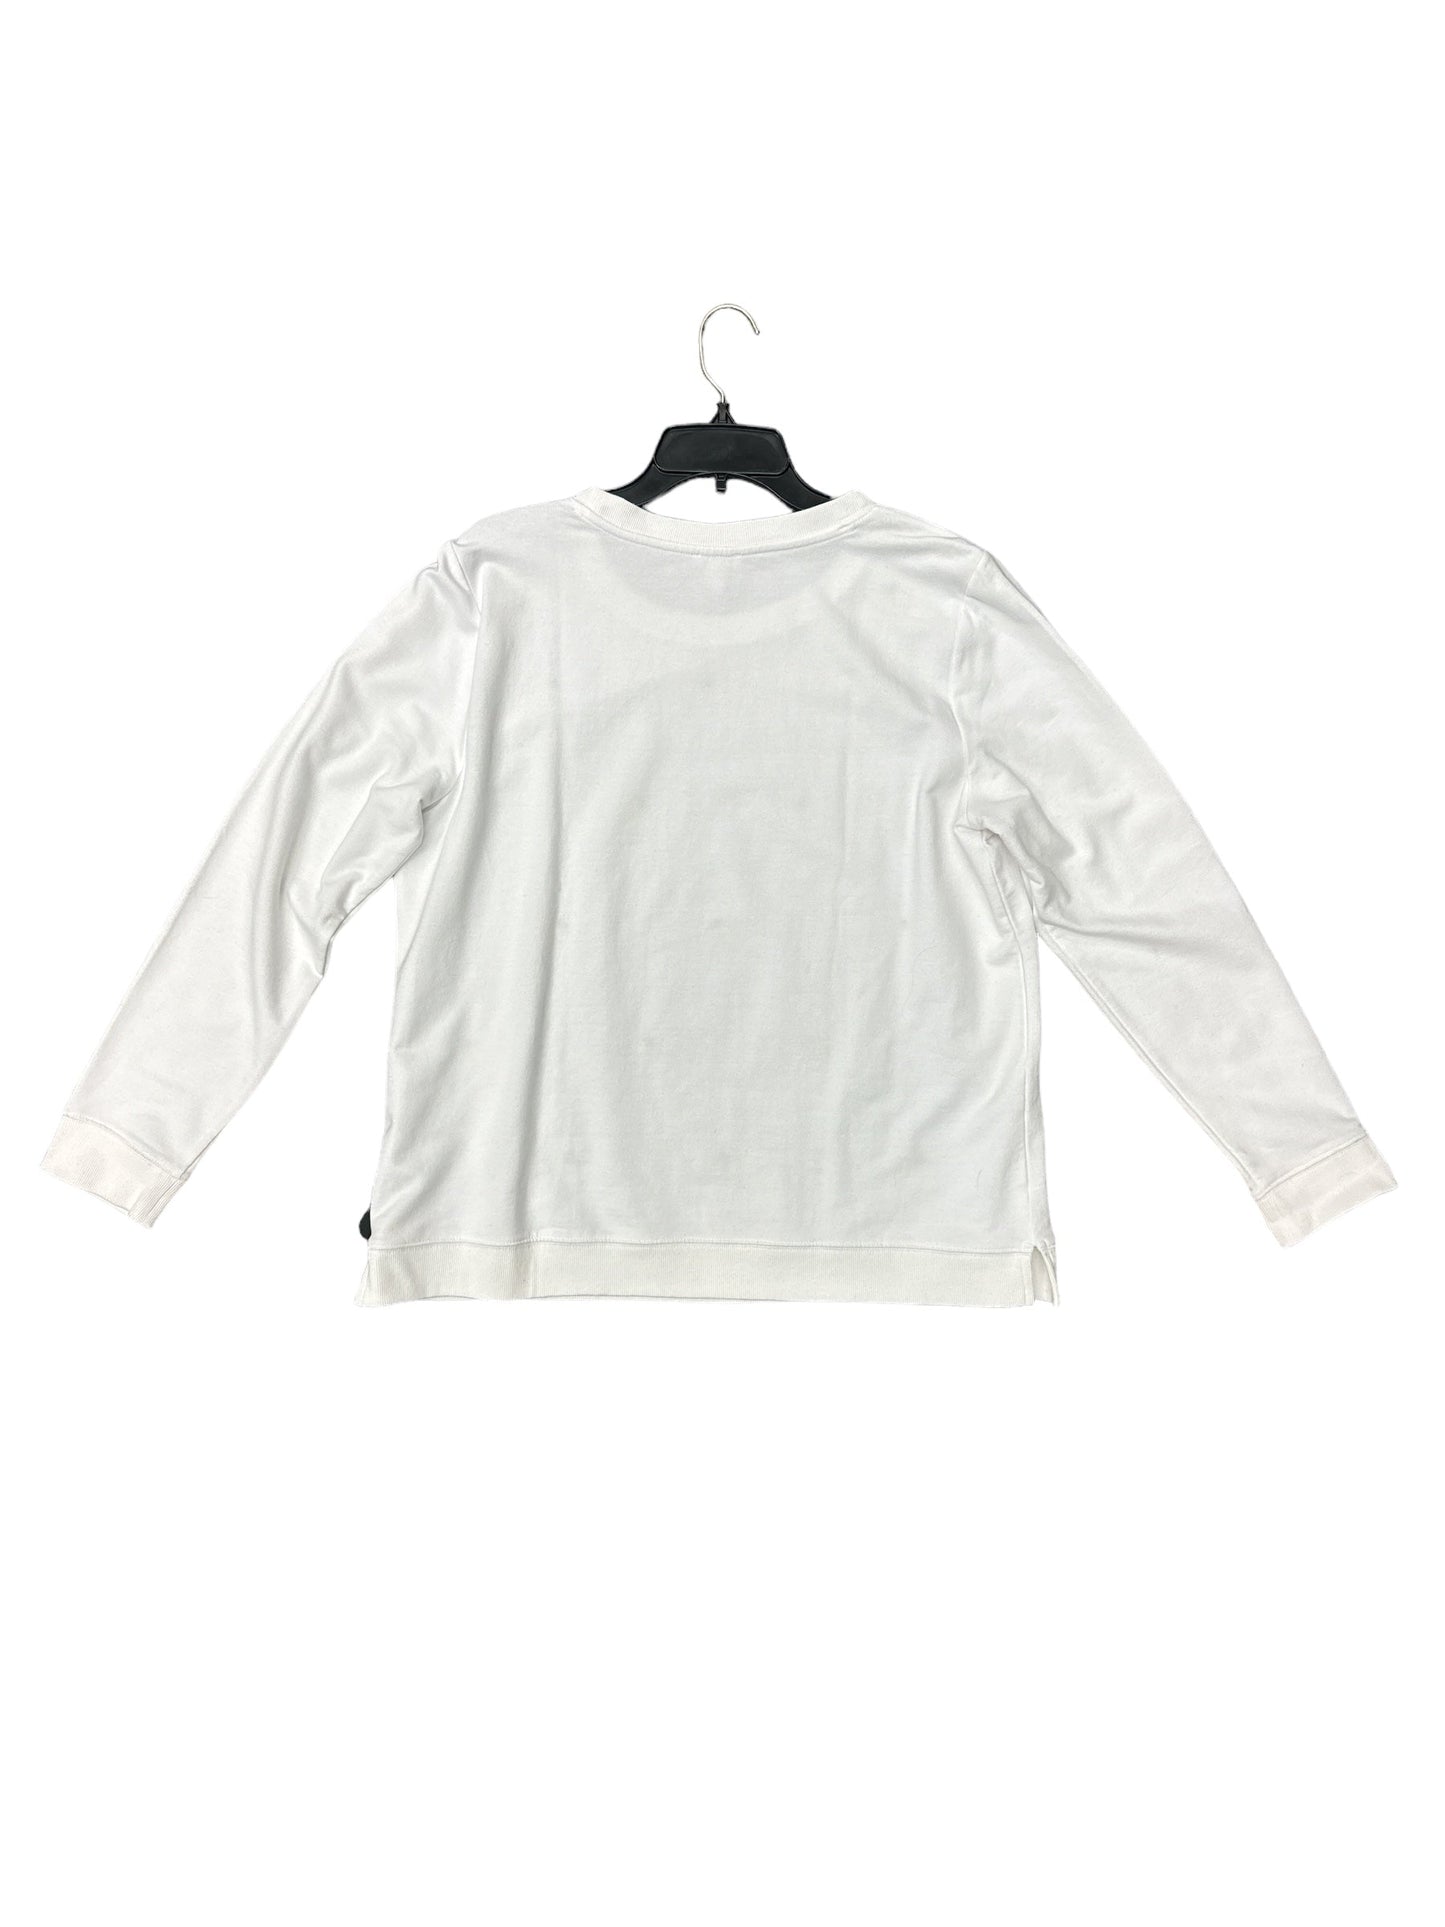 Sweatshirt Collar By Talbots  Size: L